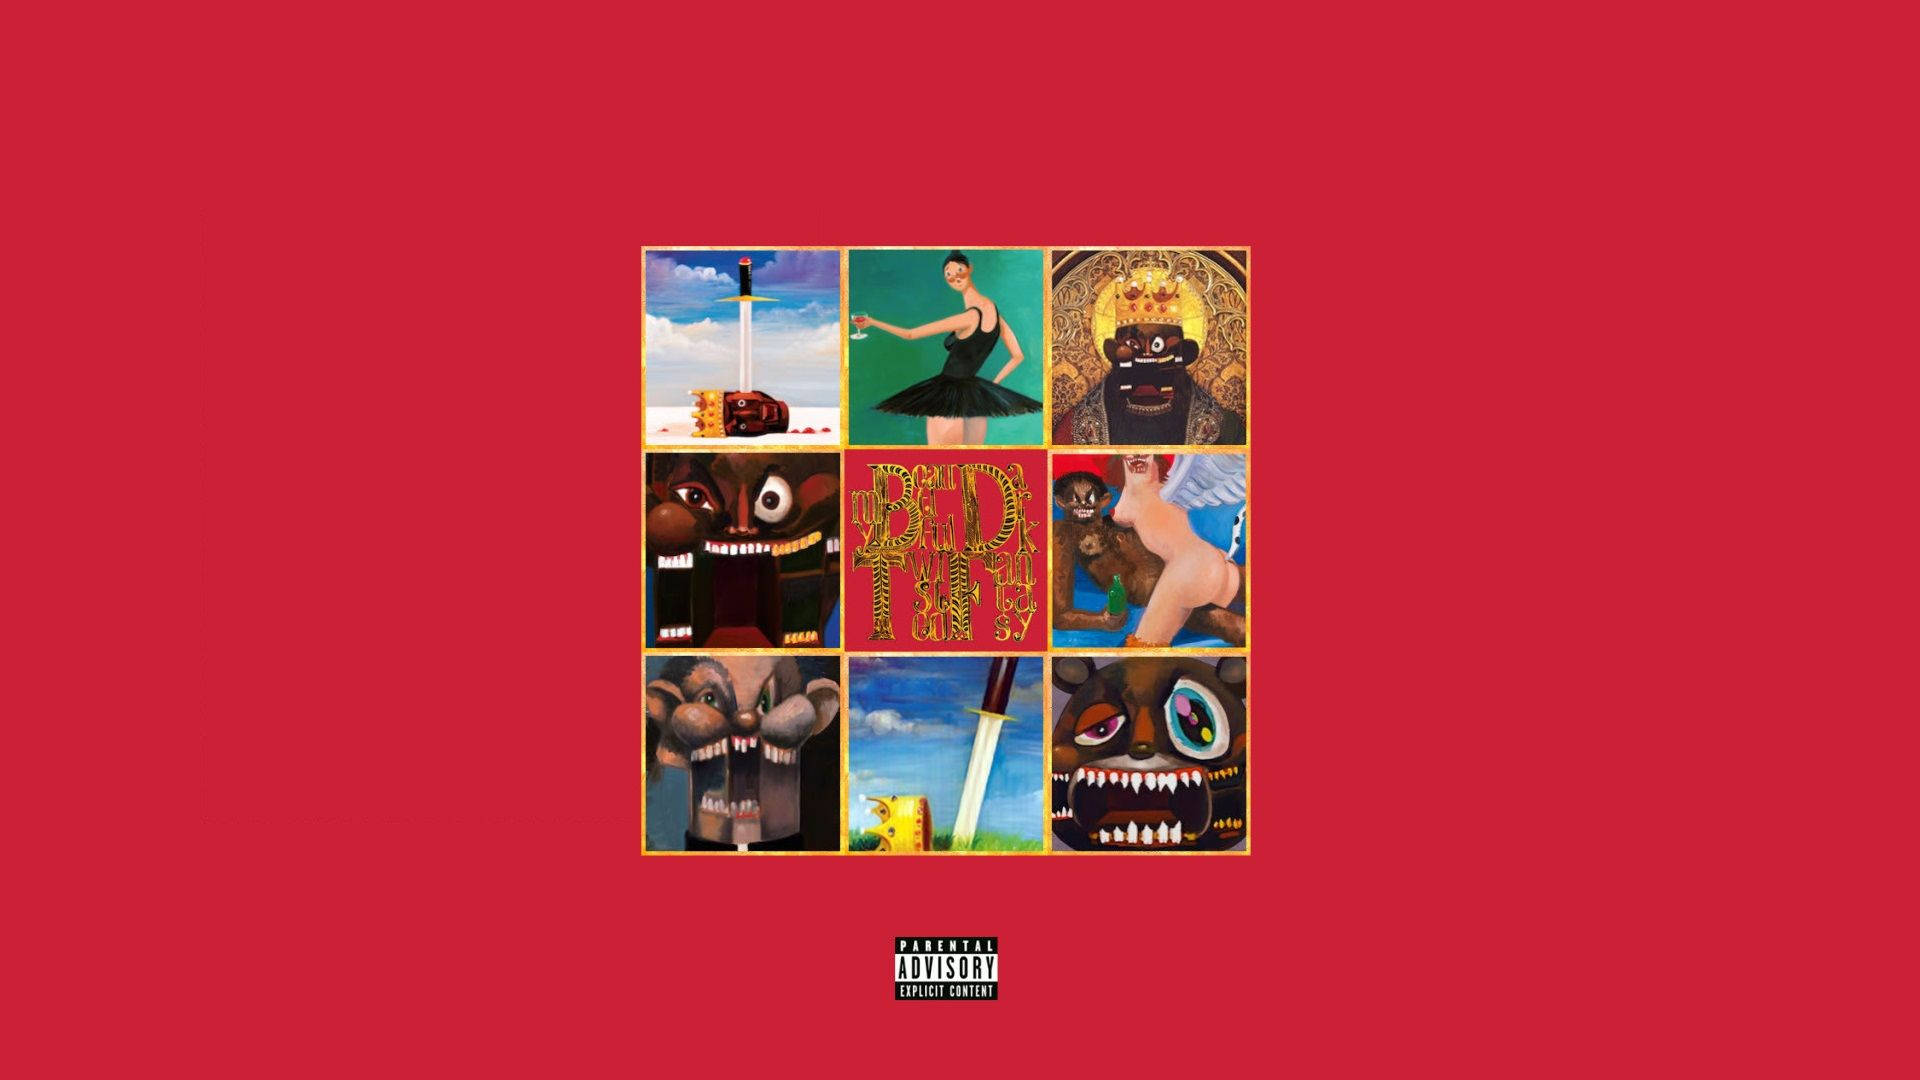 Kanyewest Auf Dem Cover Seines 80. Studioalbums. Wallpaper